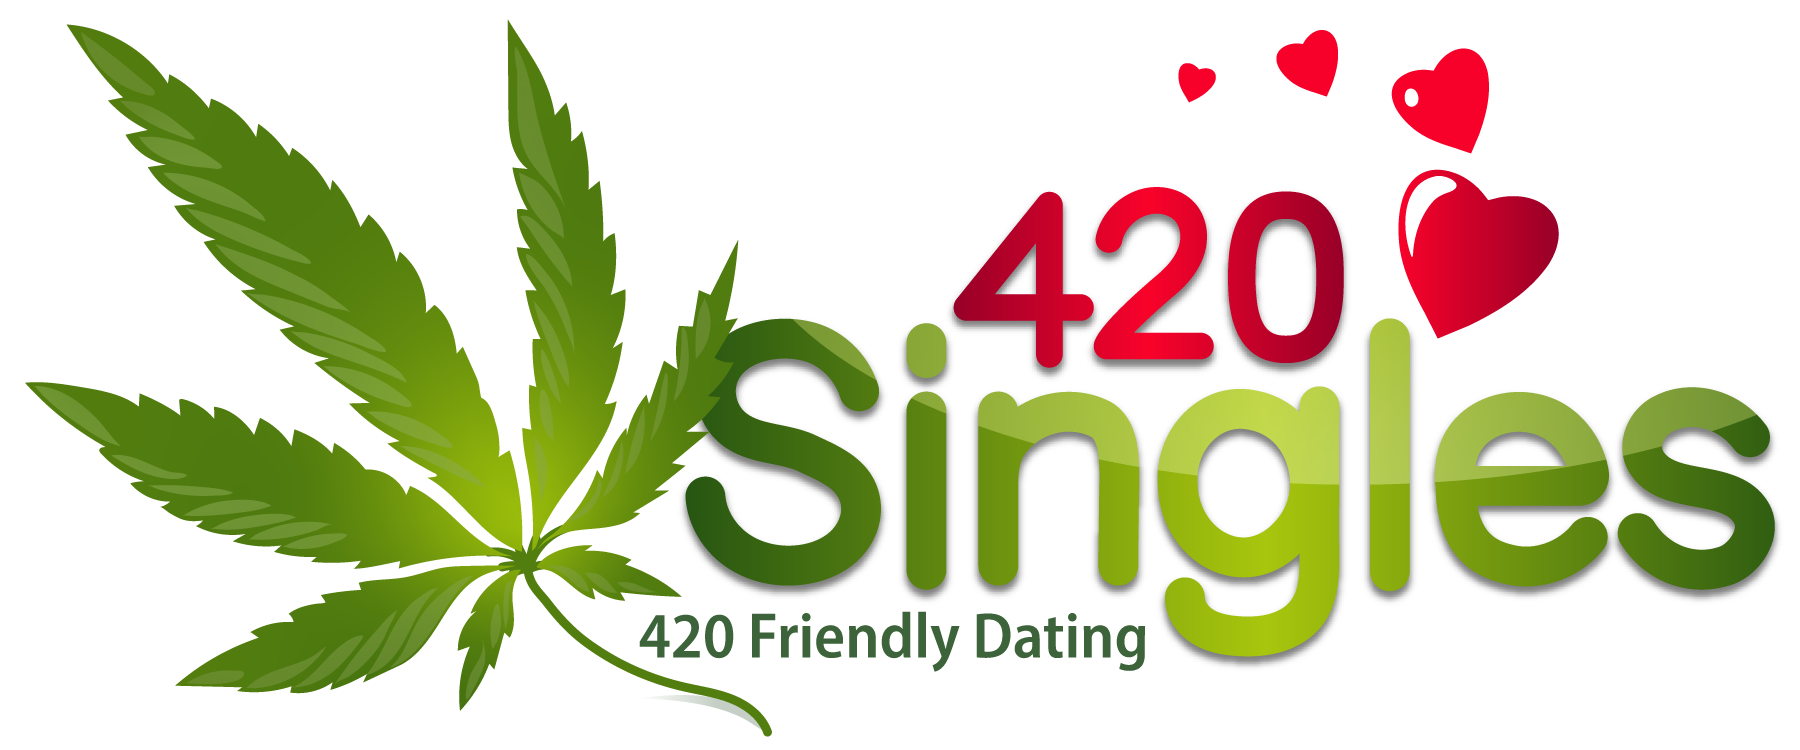 420 Singles Logo